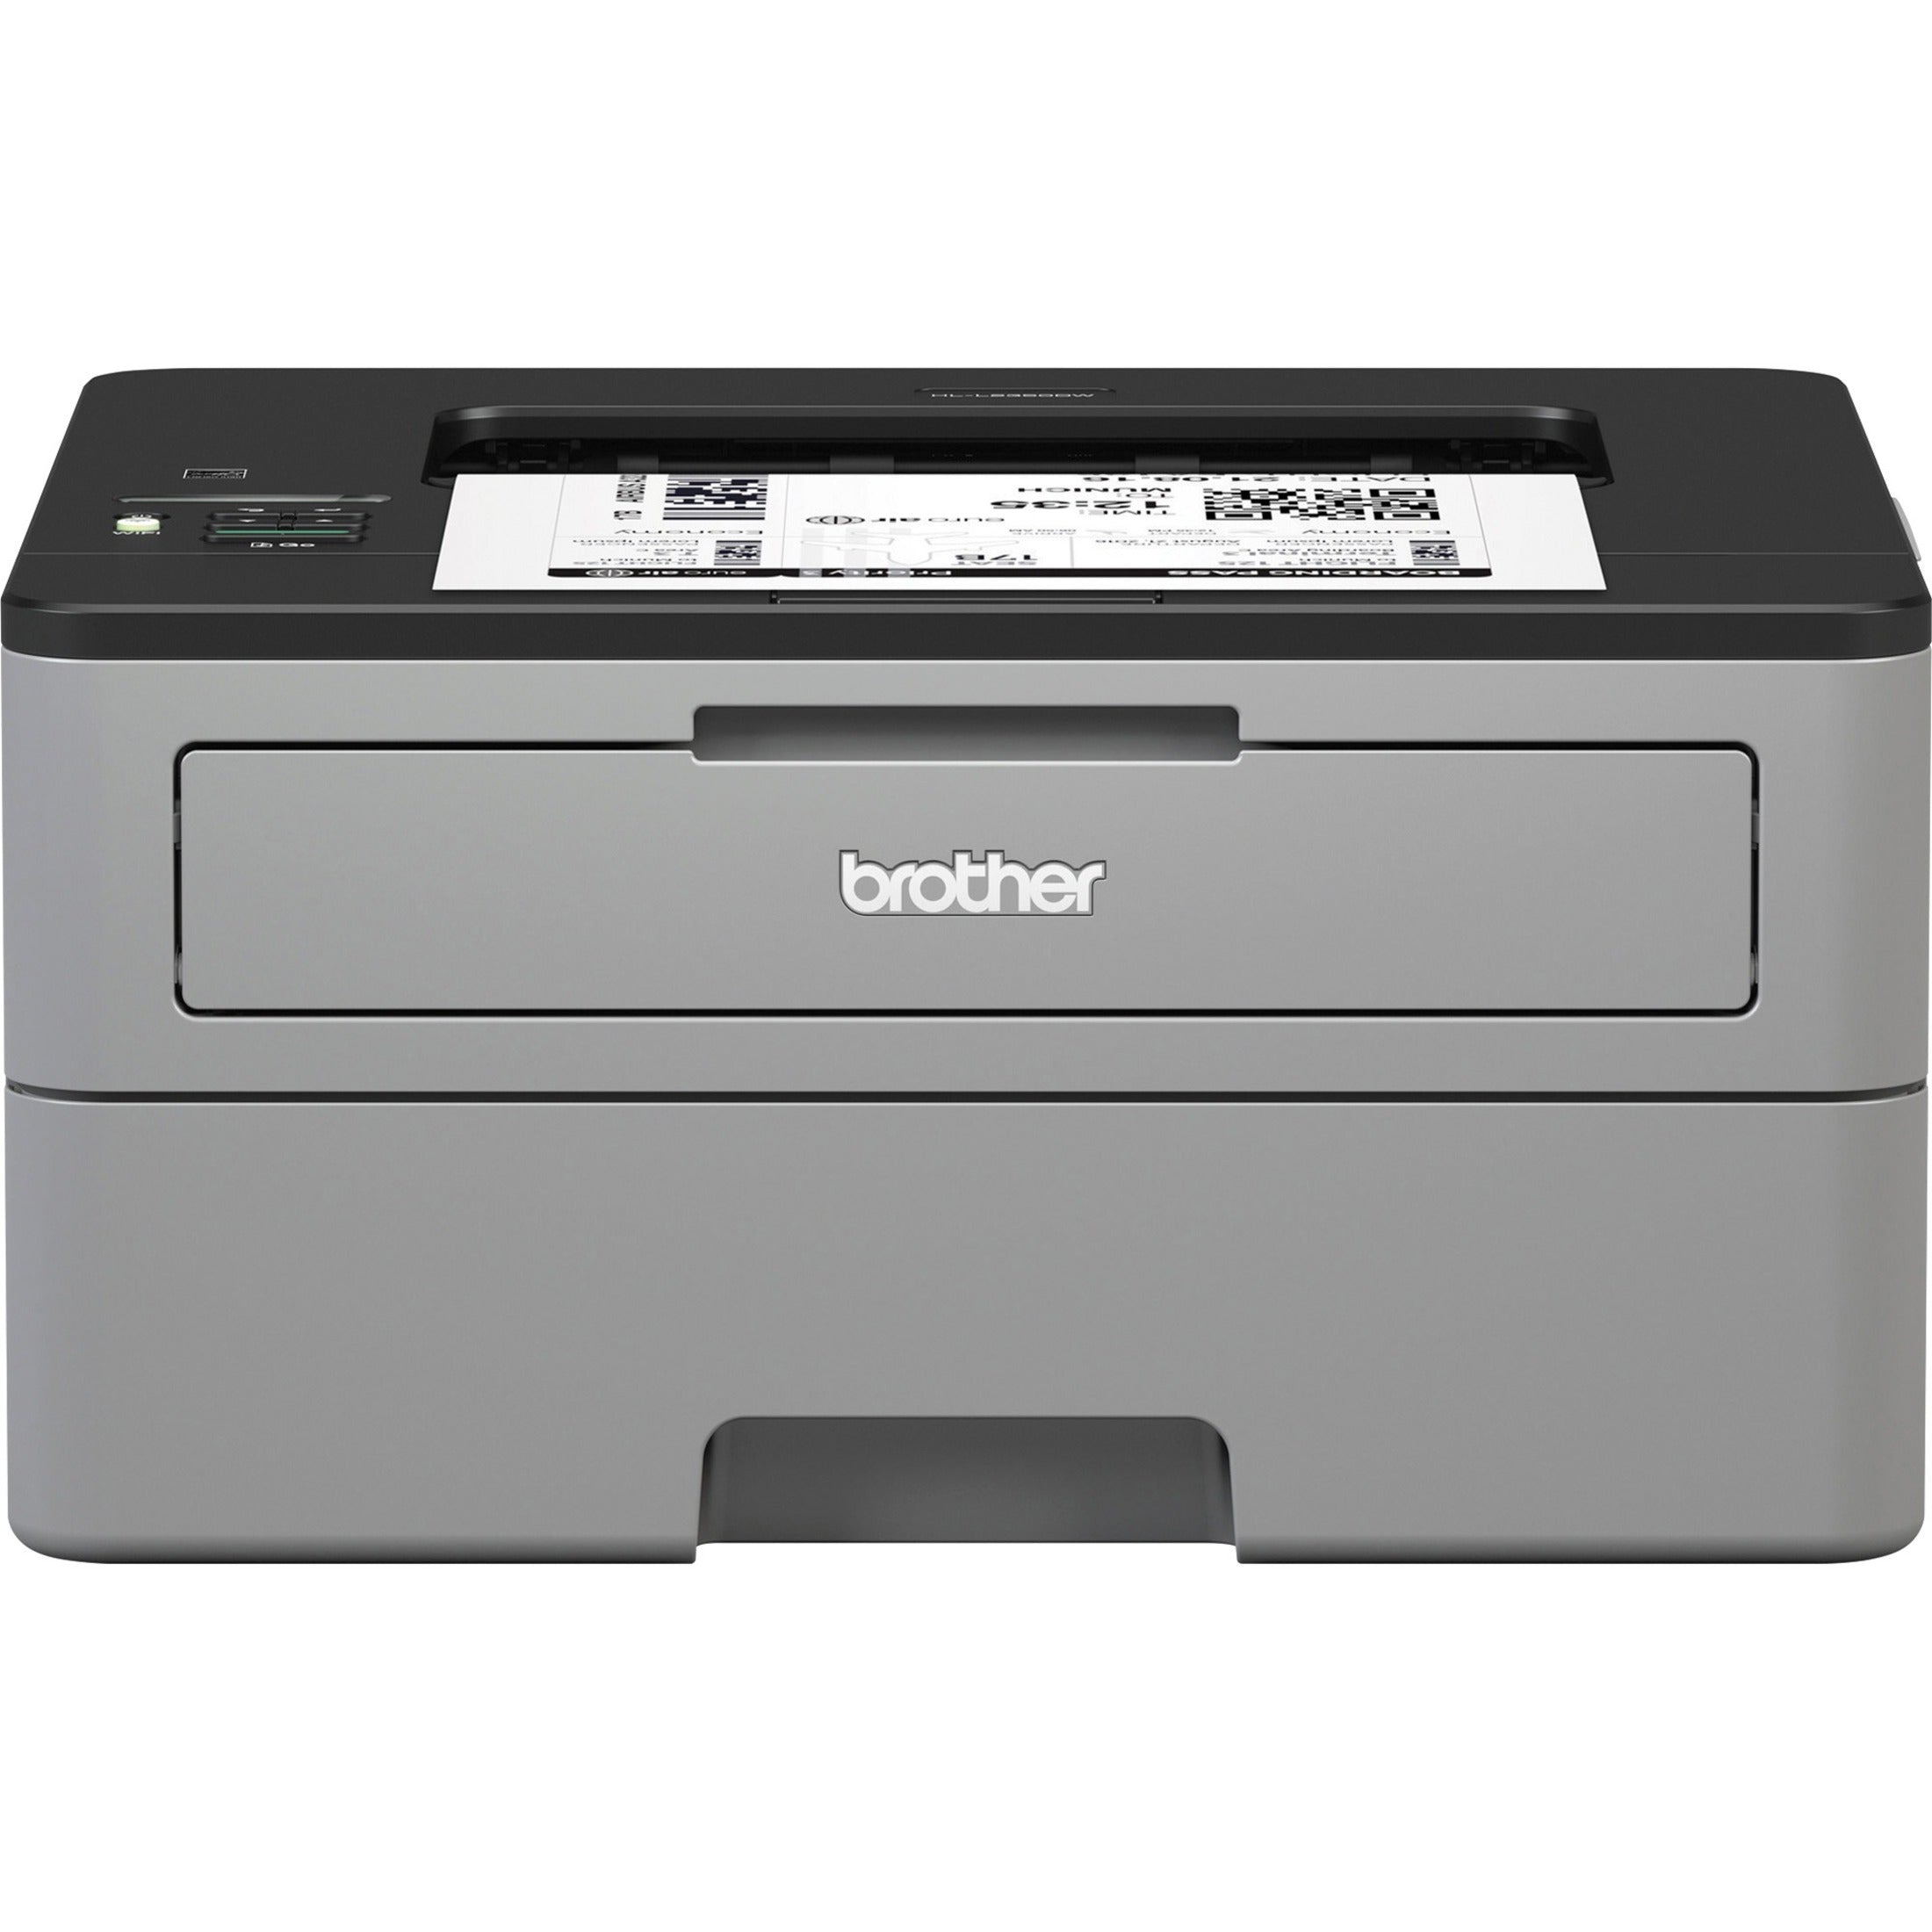 Brother HL-L2350DW Monochrome Laser Printer, Wireless, 36 ppm, Black